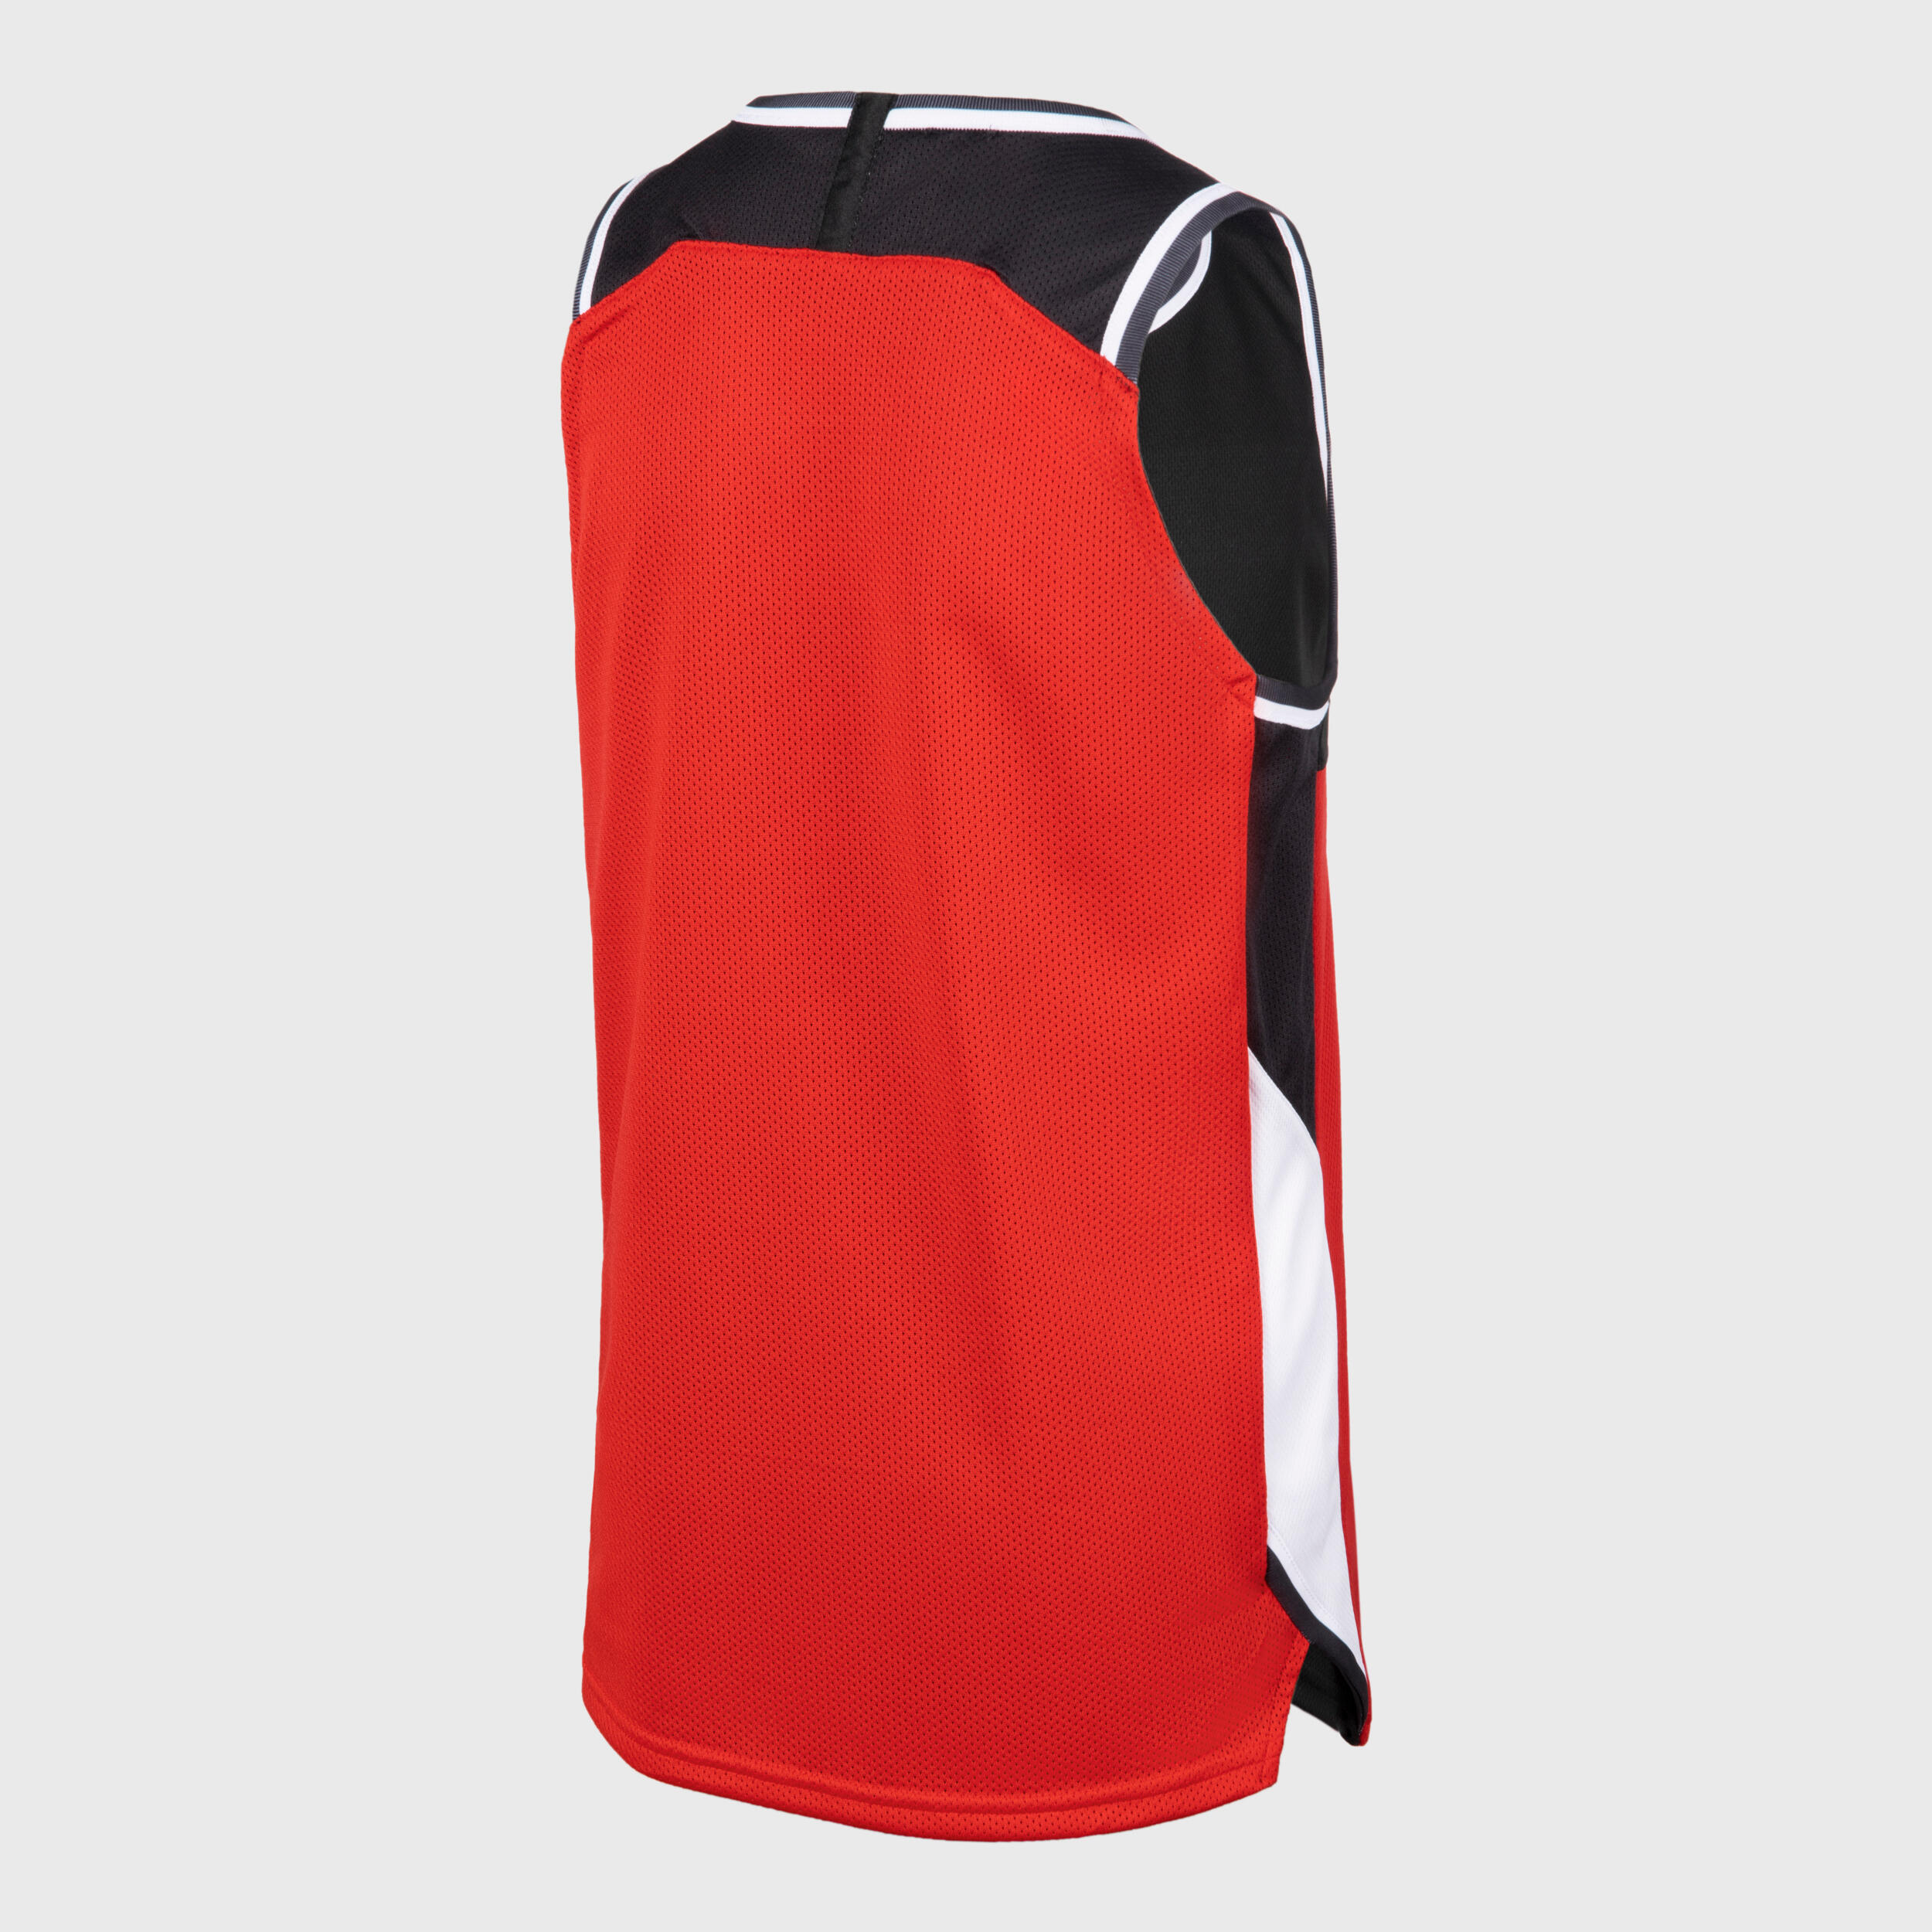 Kids' Reversible Sleeveless Basketball Jersey T500R - Red/Black 10/11